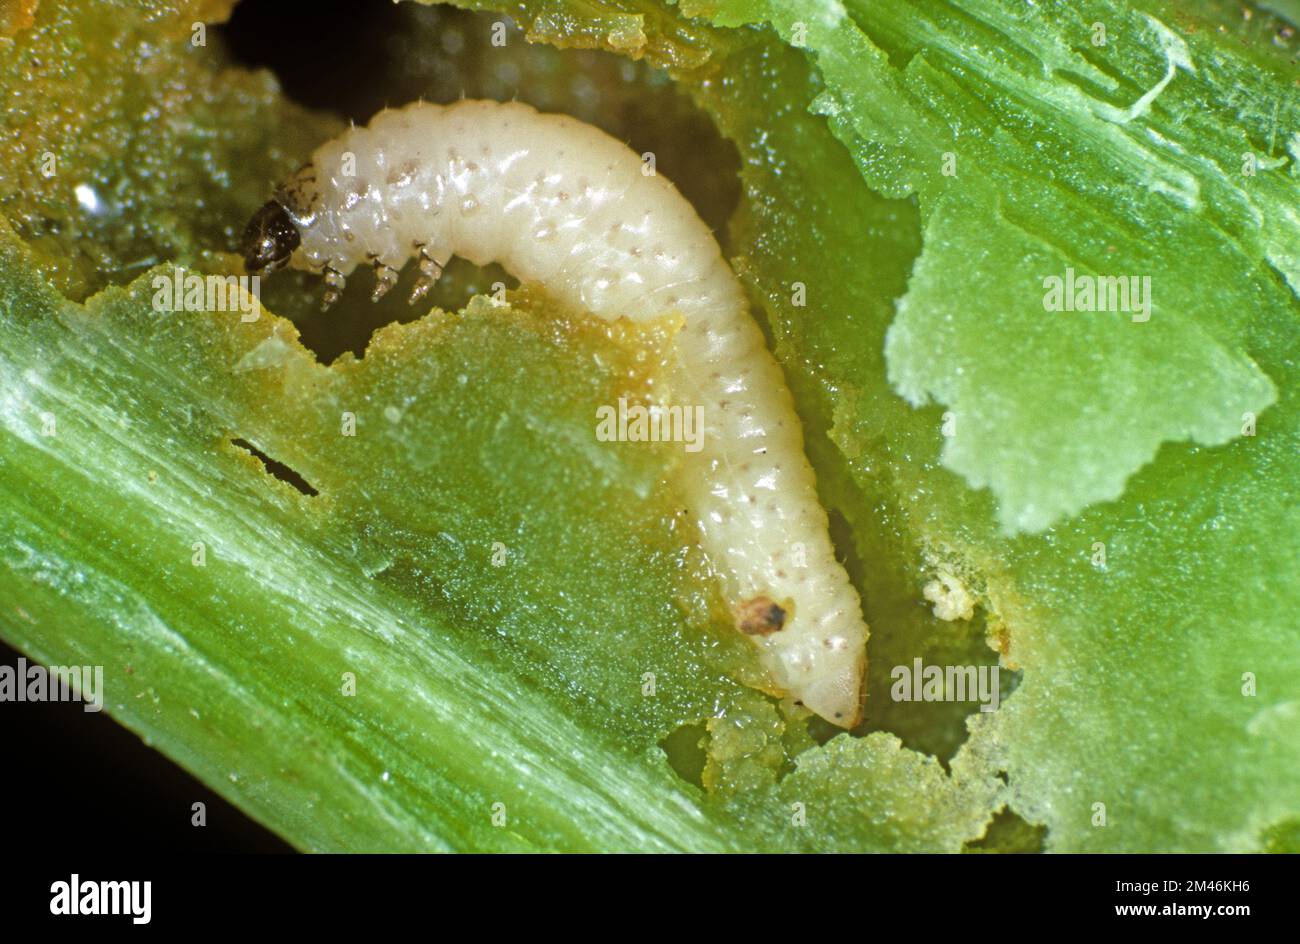 Kohlstamm-Flohkäfer-(Psylliodes chrysocephala-)Larven in beschädigtem Raps Brassica napus-) Pflanzenstamm Stockfoto